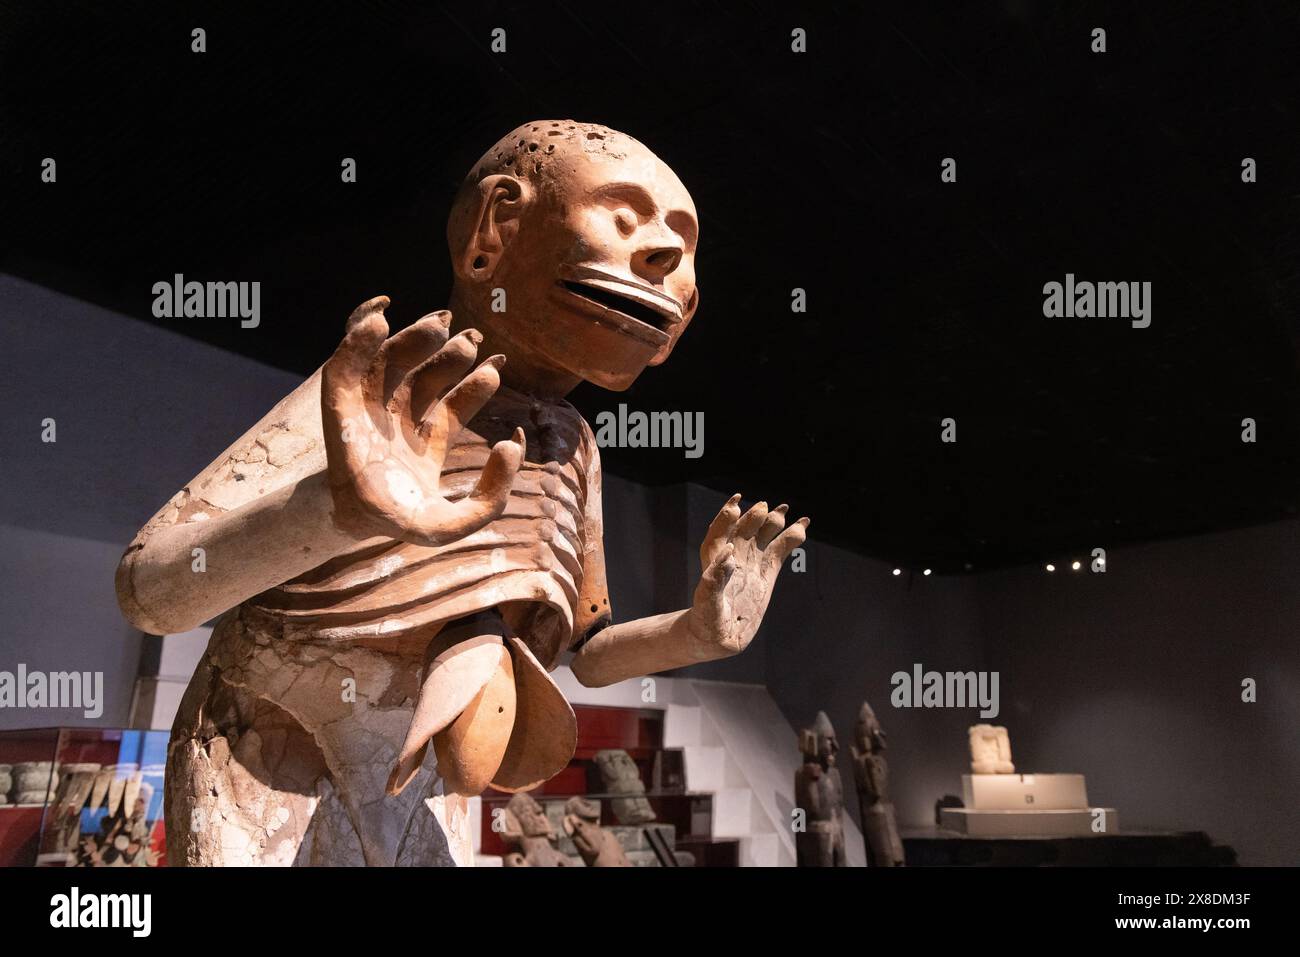 Aztekengott des Todes; Skulptur von Mictlantecuhtli, aus Tenochtitlan, der Hauptstadt der aztekischen Zivilisation, ein aztekisches Artefakt, Templo Mayor Museum; Mexiko Stockfoto